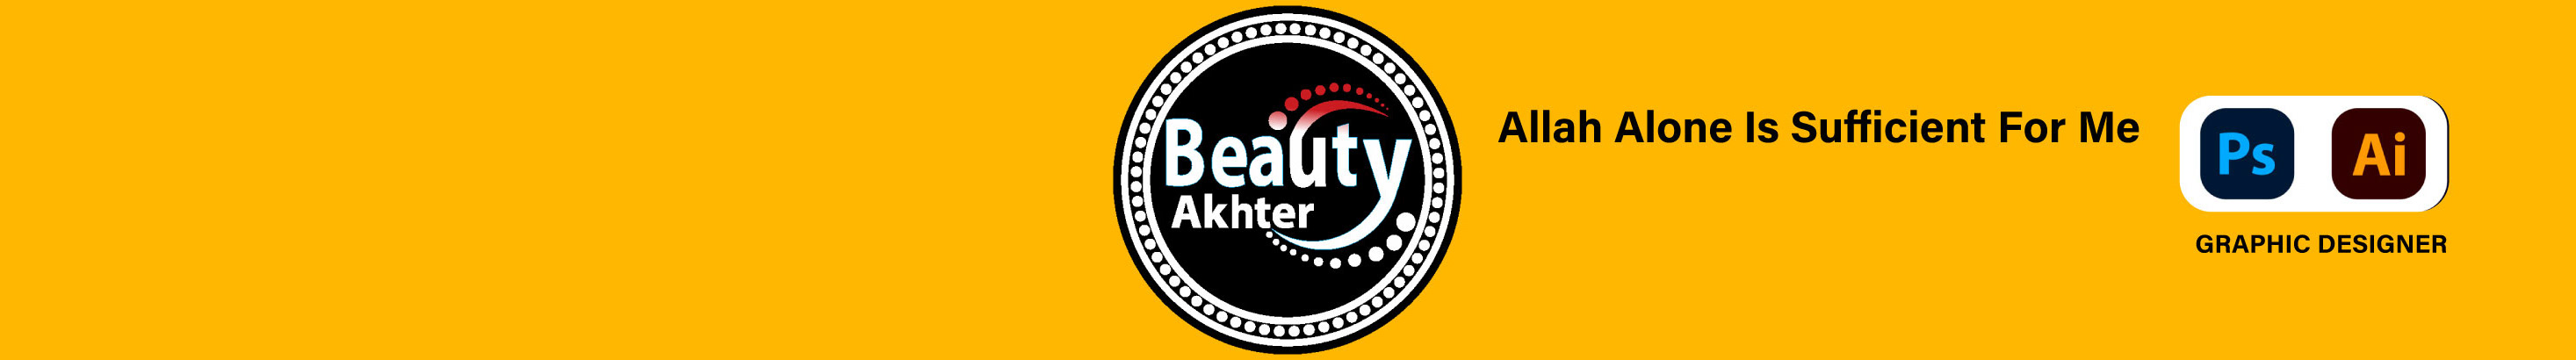 Mst: Beauty Akhter's profile banner